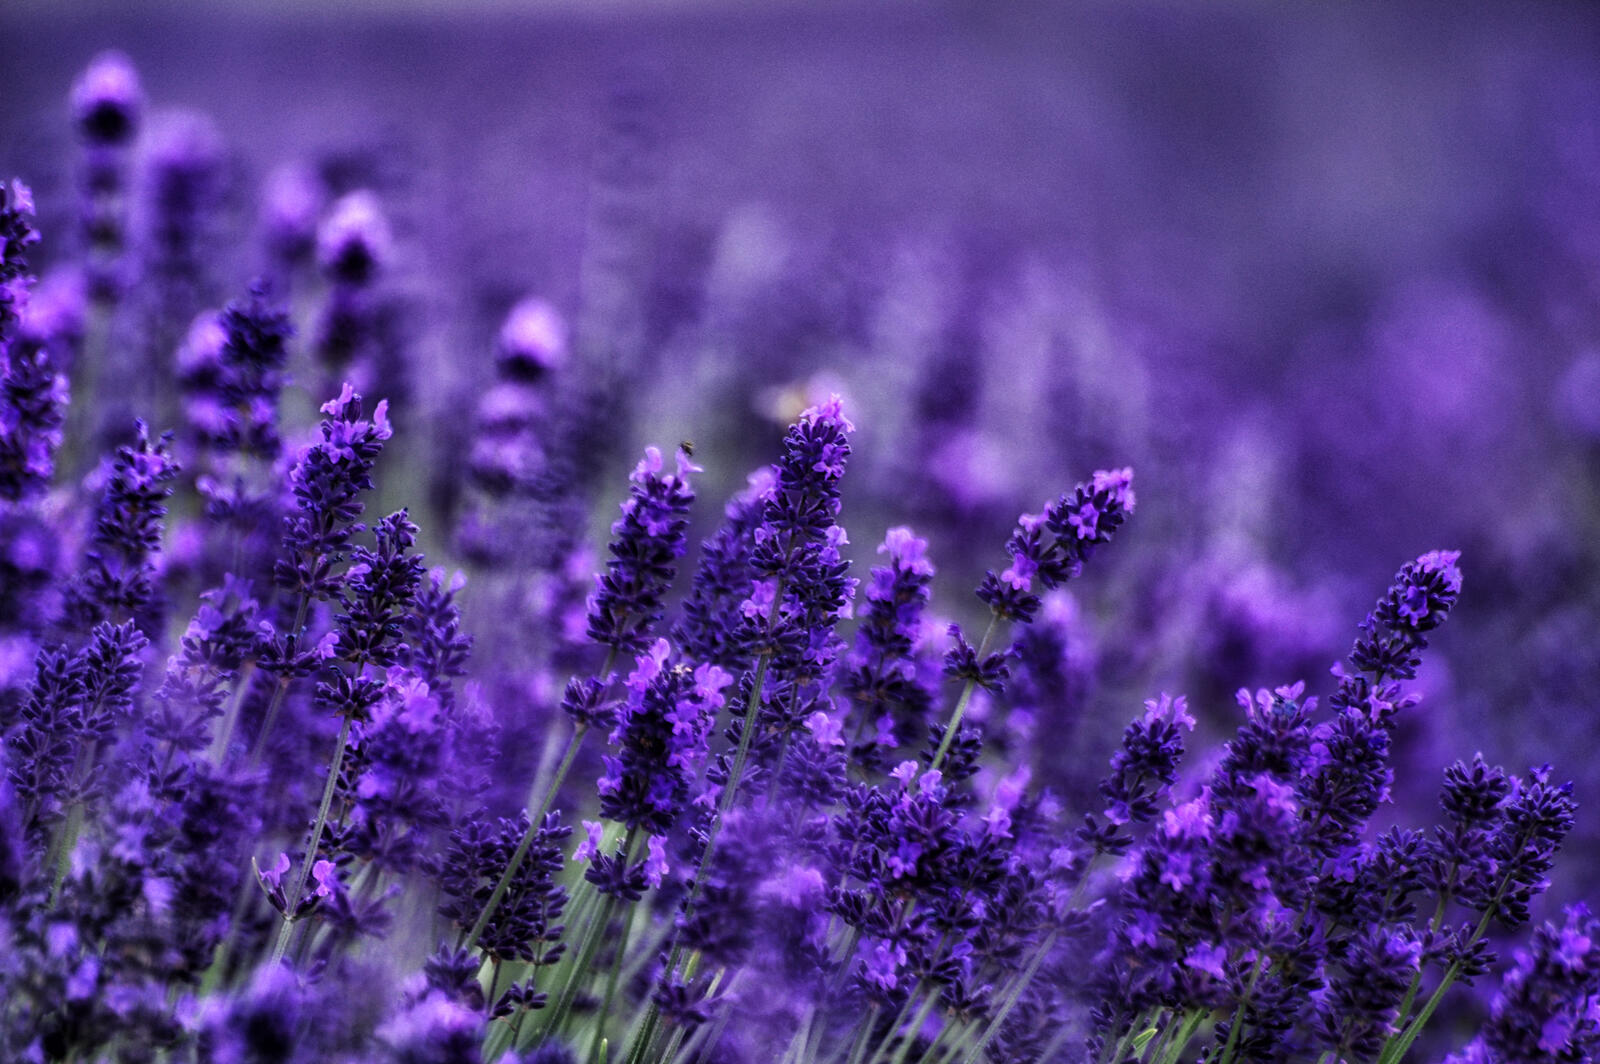 Wallpapers plant field lavender on the desktop